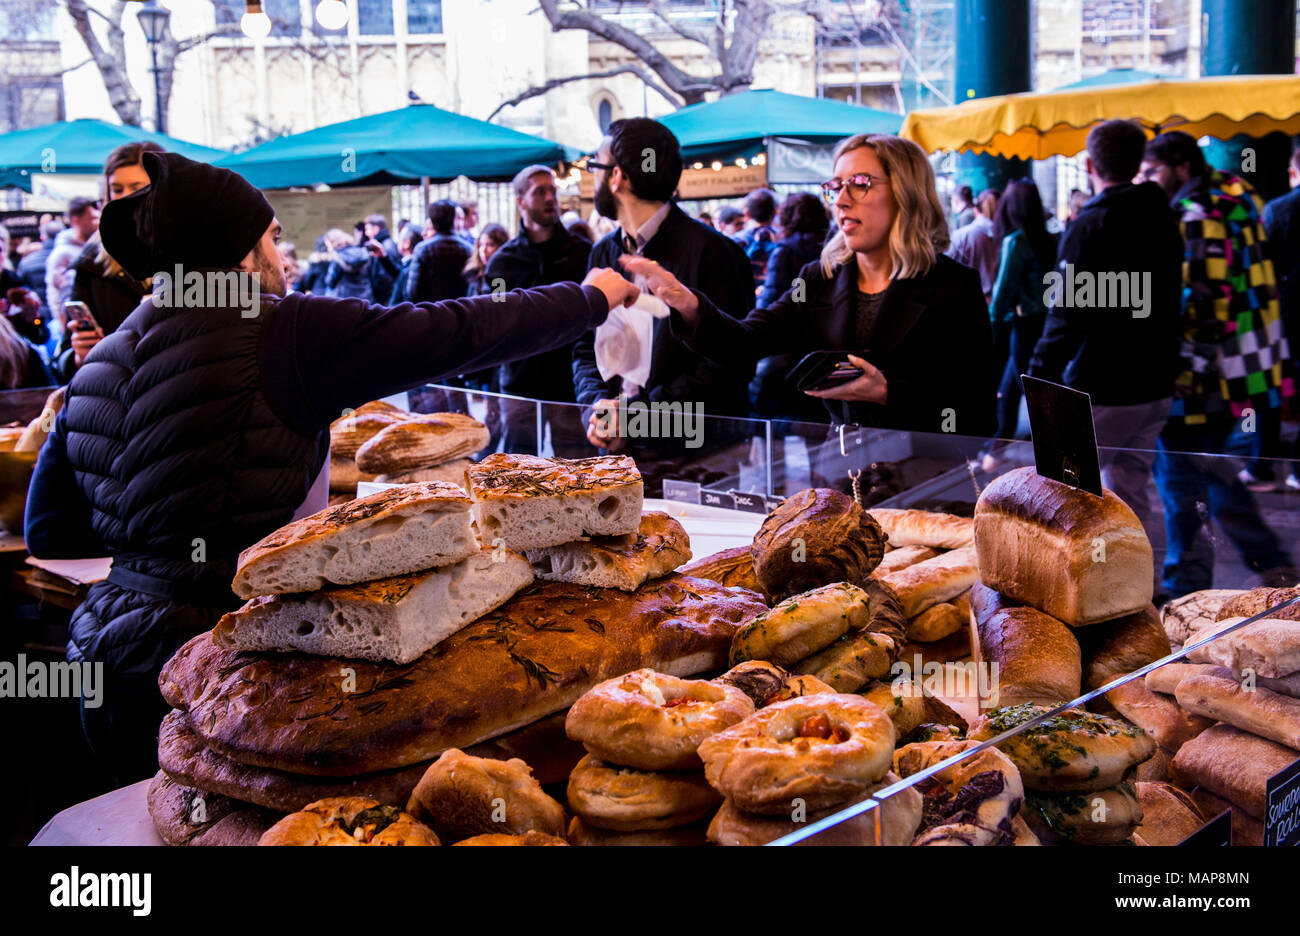 Woman buying food from baker's stall, Borough Market, Southwark, London, England, UK Stock Photo